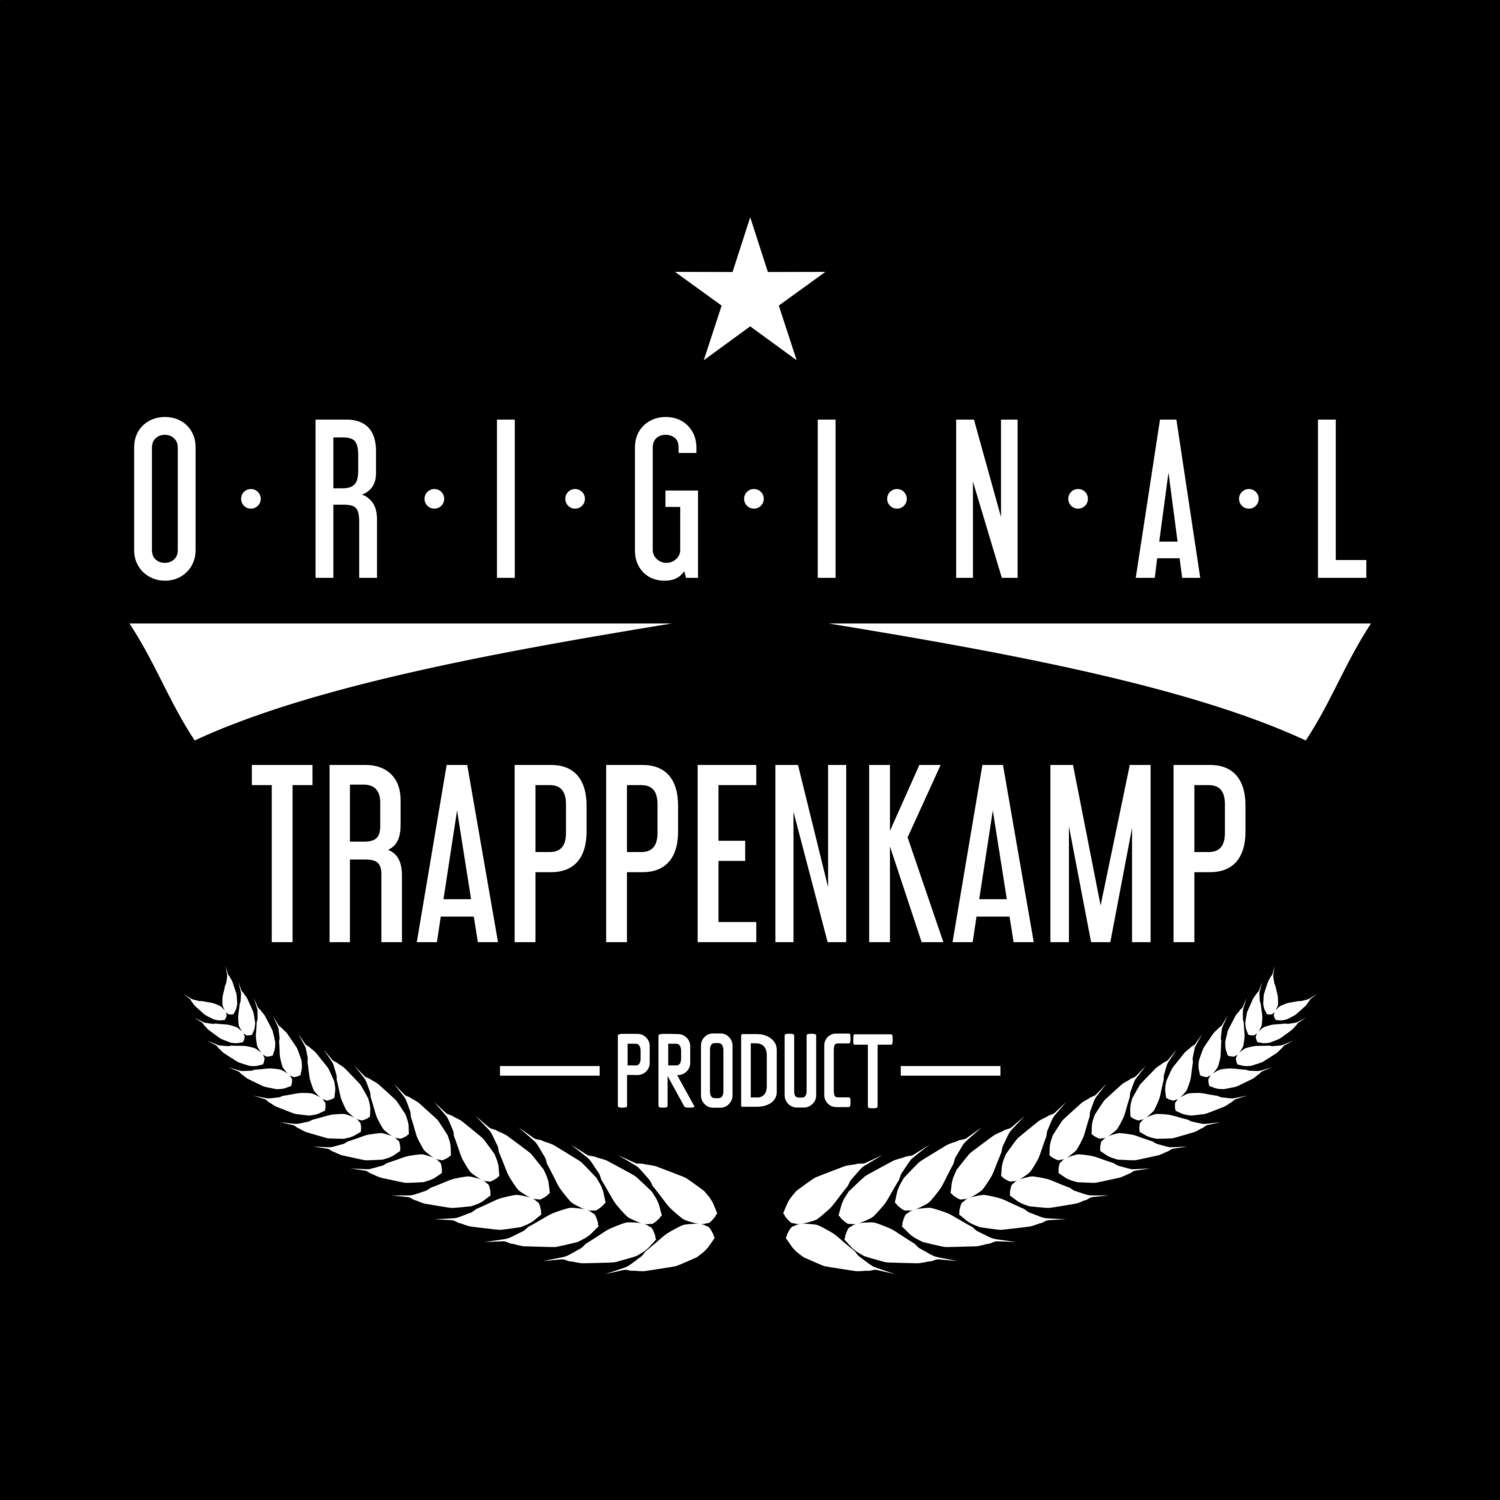 Trappenkamp T-Shirt »Original Product«